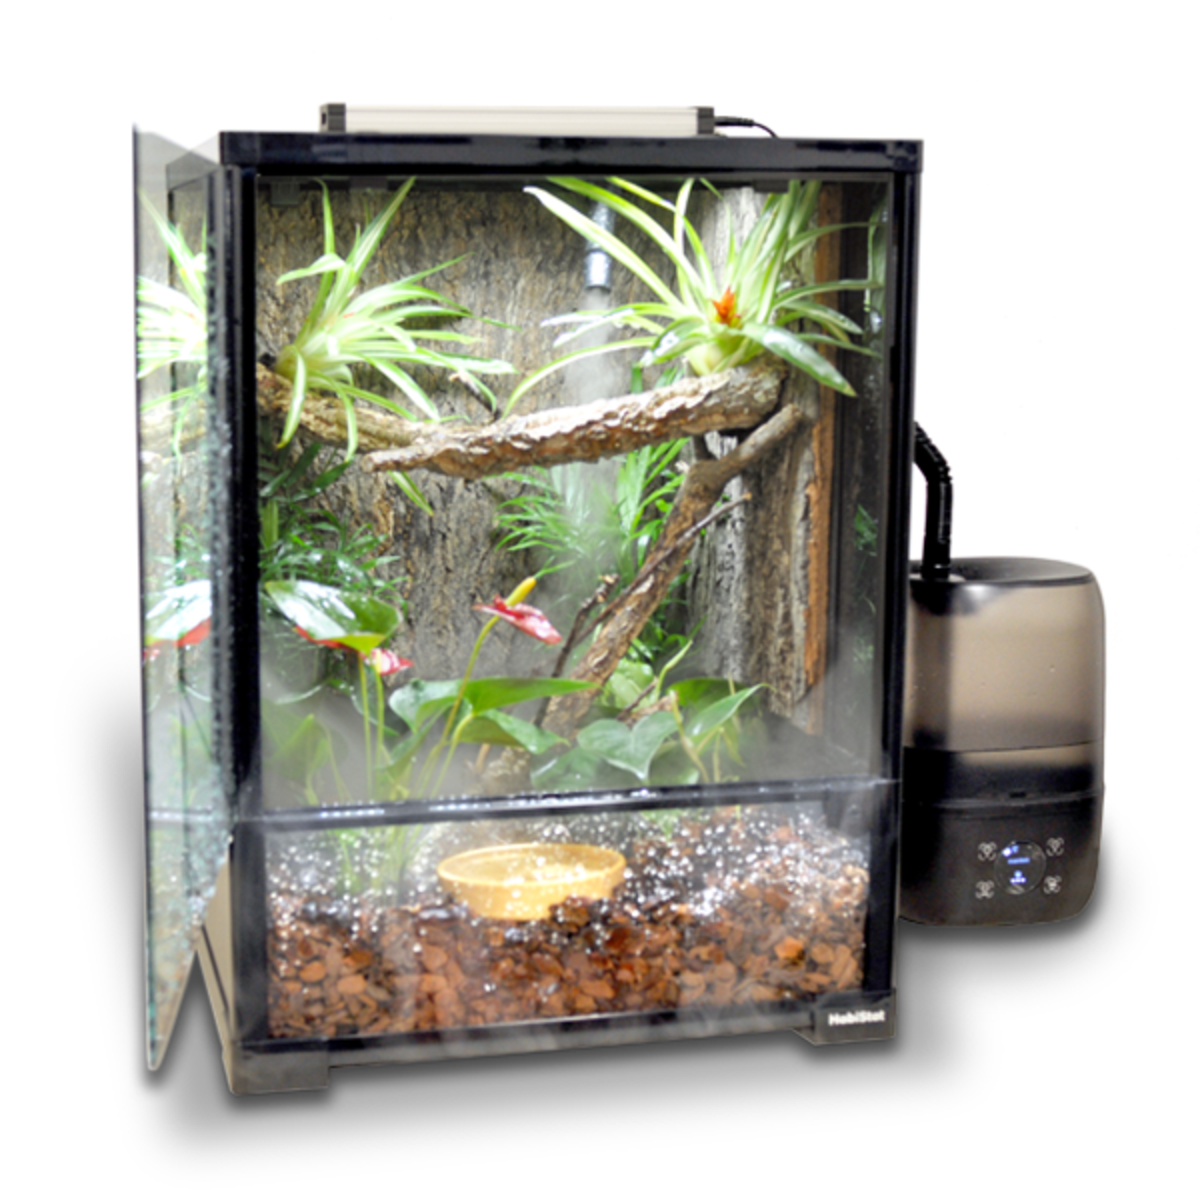 HabiStat Glass Reptile Terrarium (IN STORE ONLY)